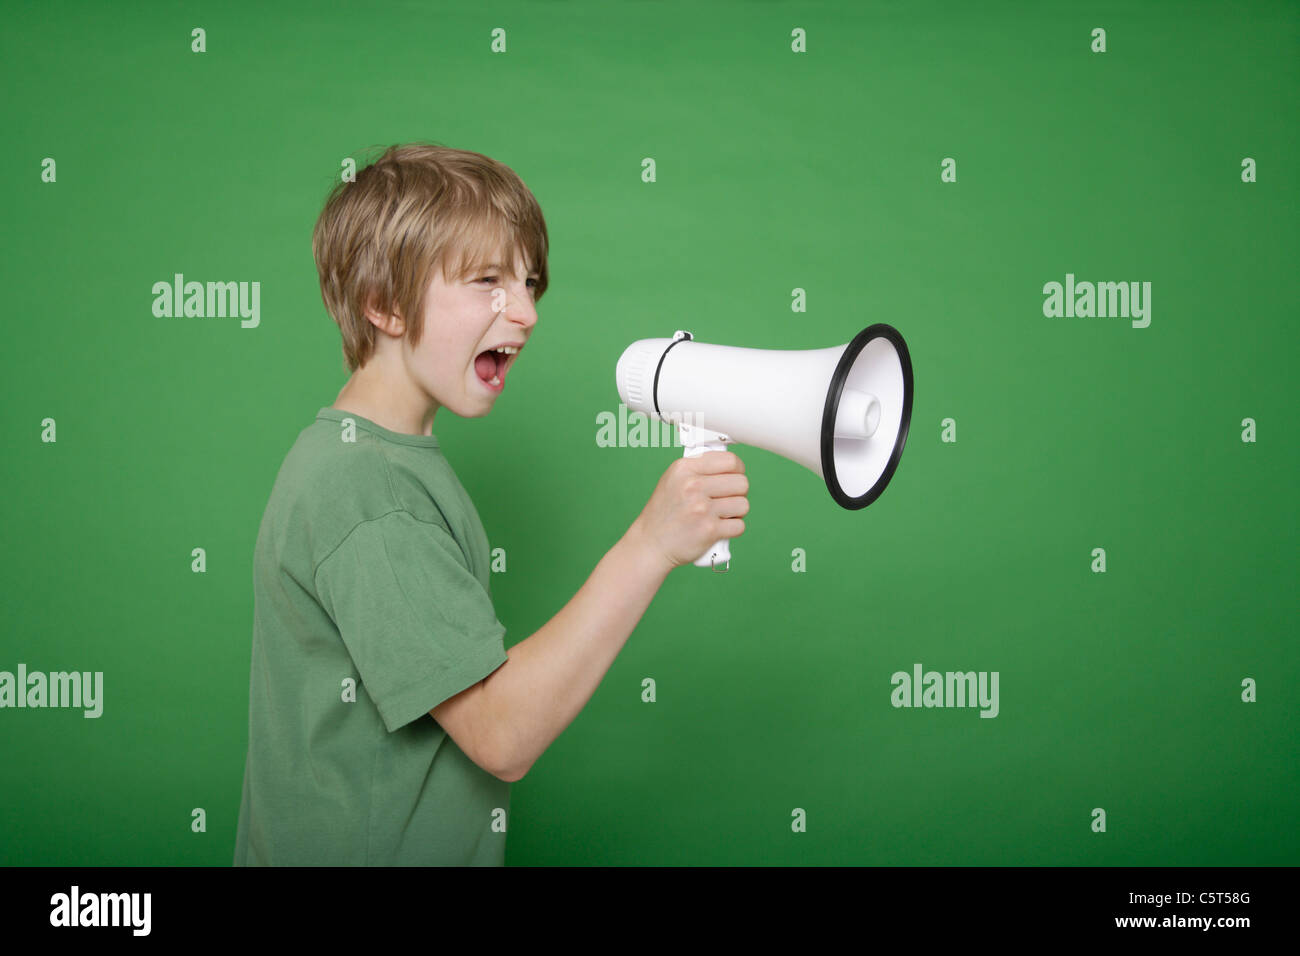 Boy screaming in megaphone against green background Stock Photo